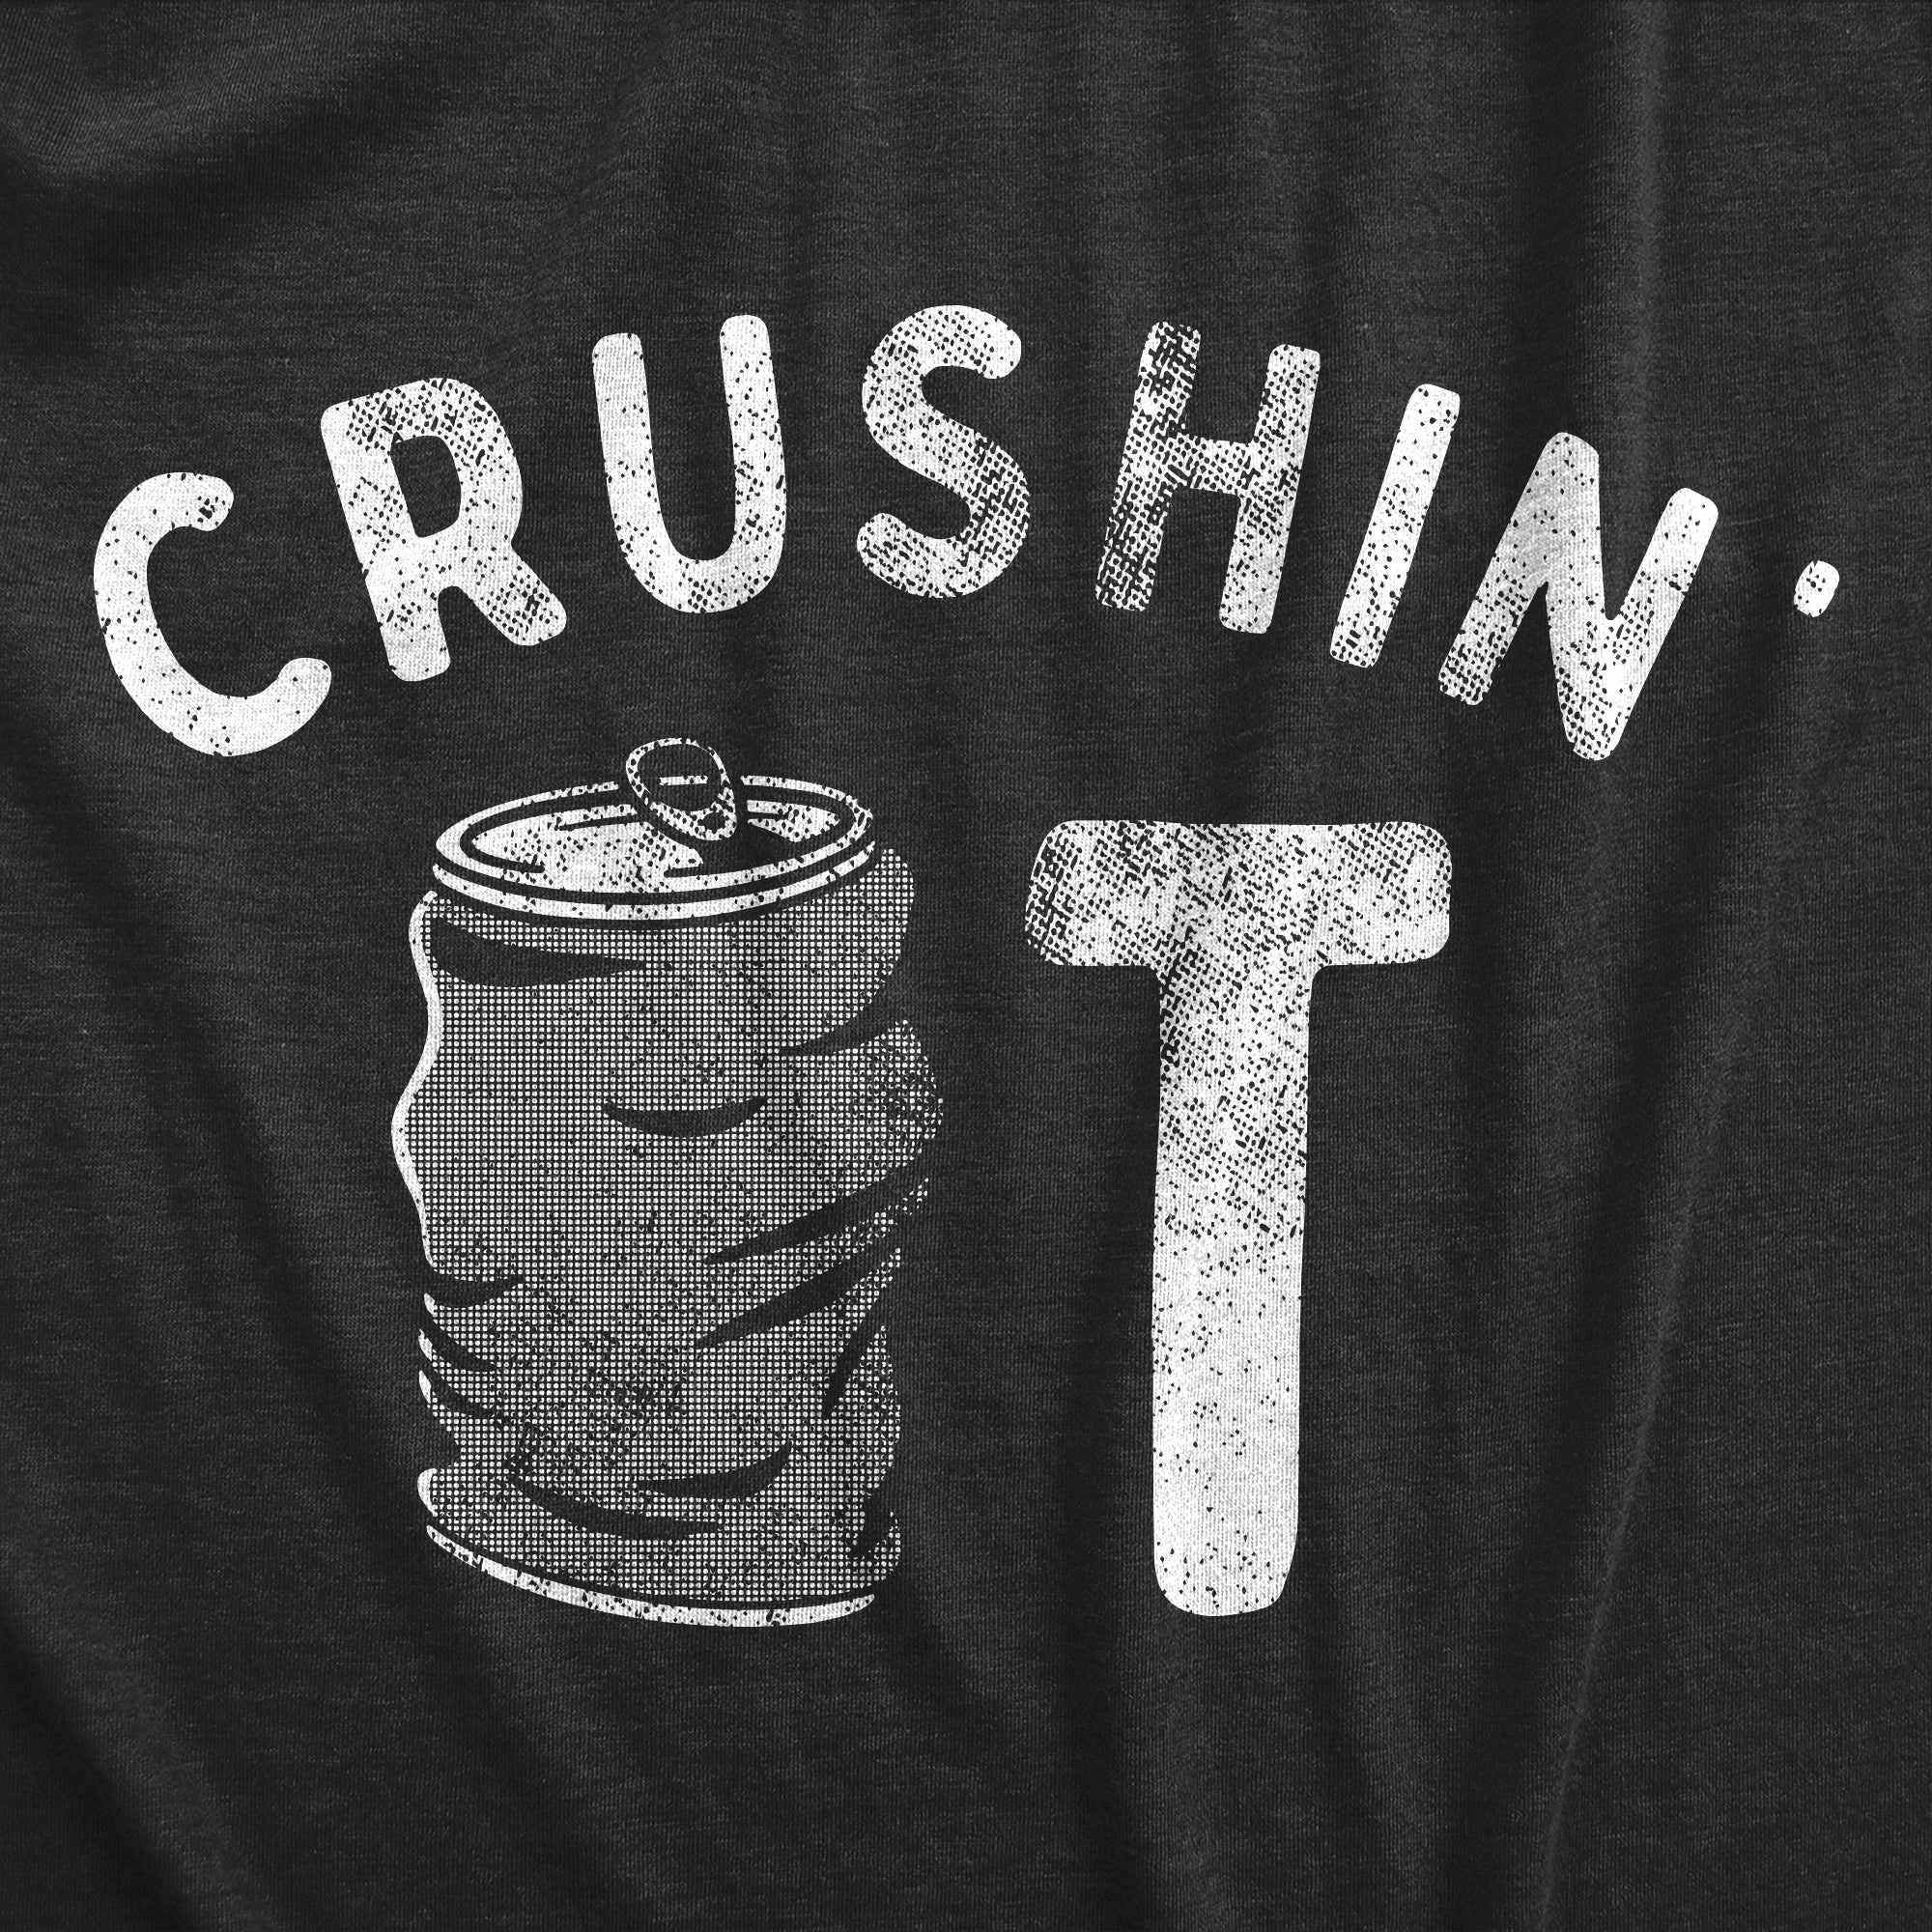 Funny Heather Black - CRUSHIN Crushin It Womens T Shirt Nerdy Drinking Beer Tee